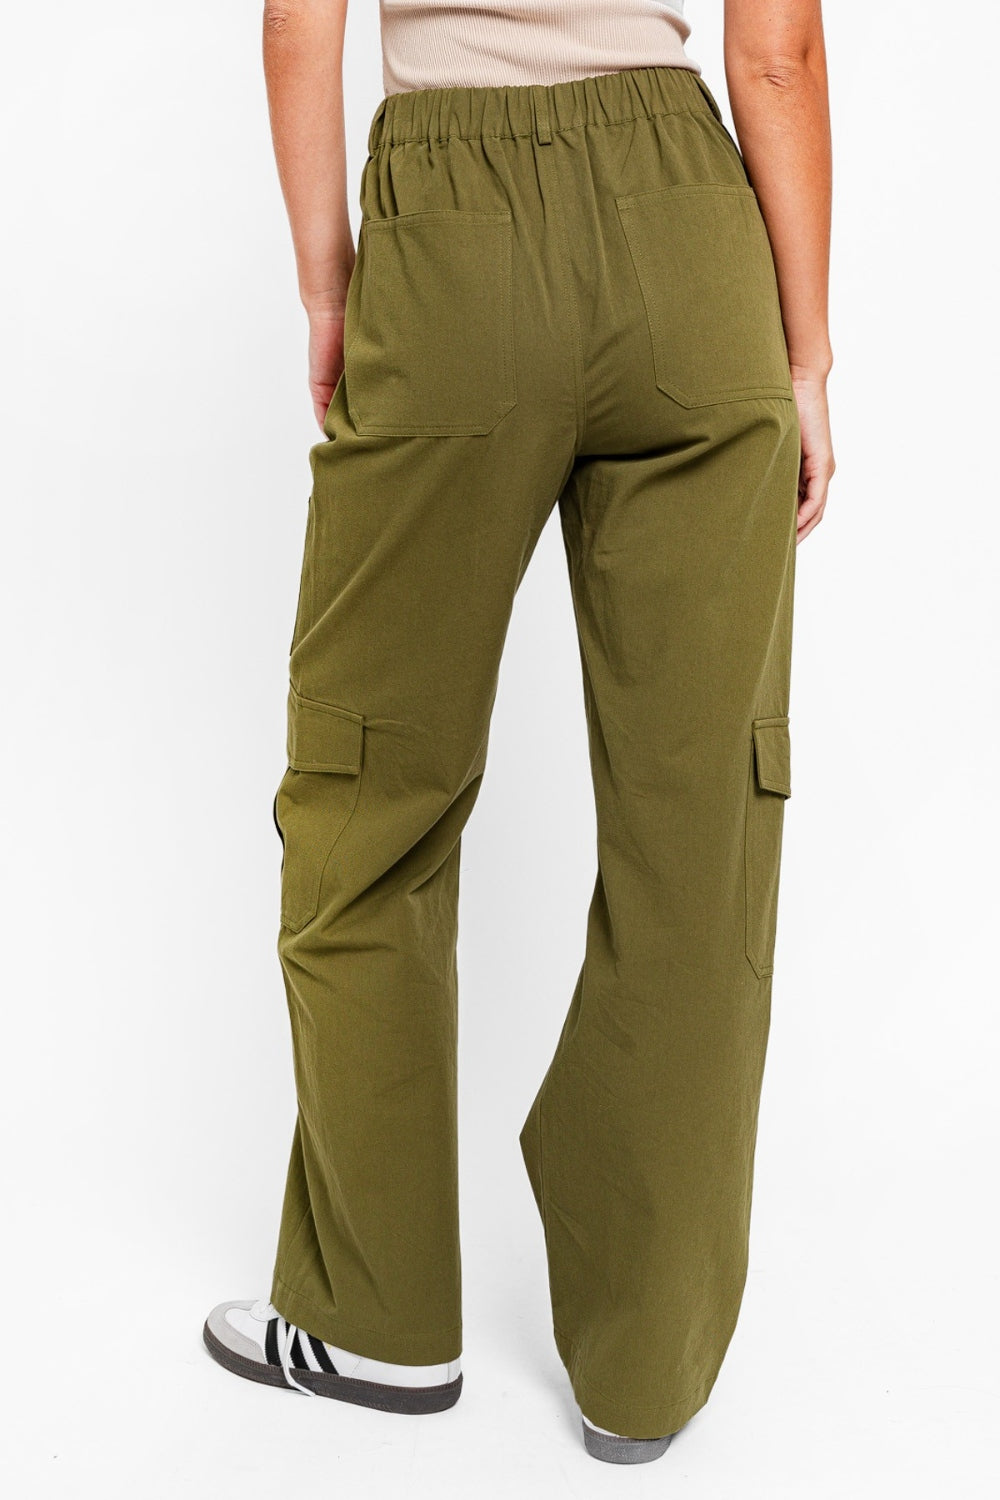 Tasha Apparel High Waisted Wide Leg Cargo Pants with Pockets - Tigbuls Variety Fashion